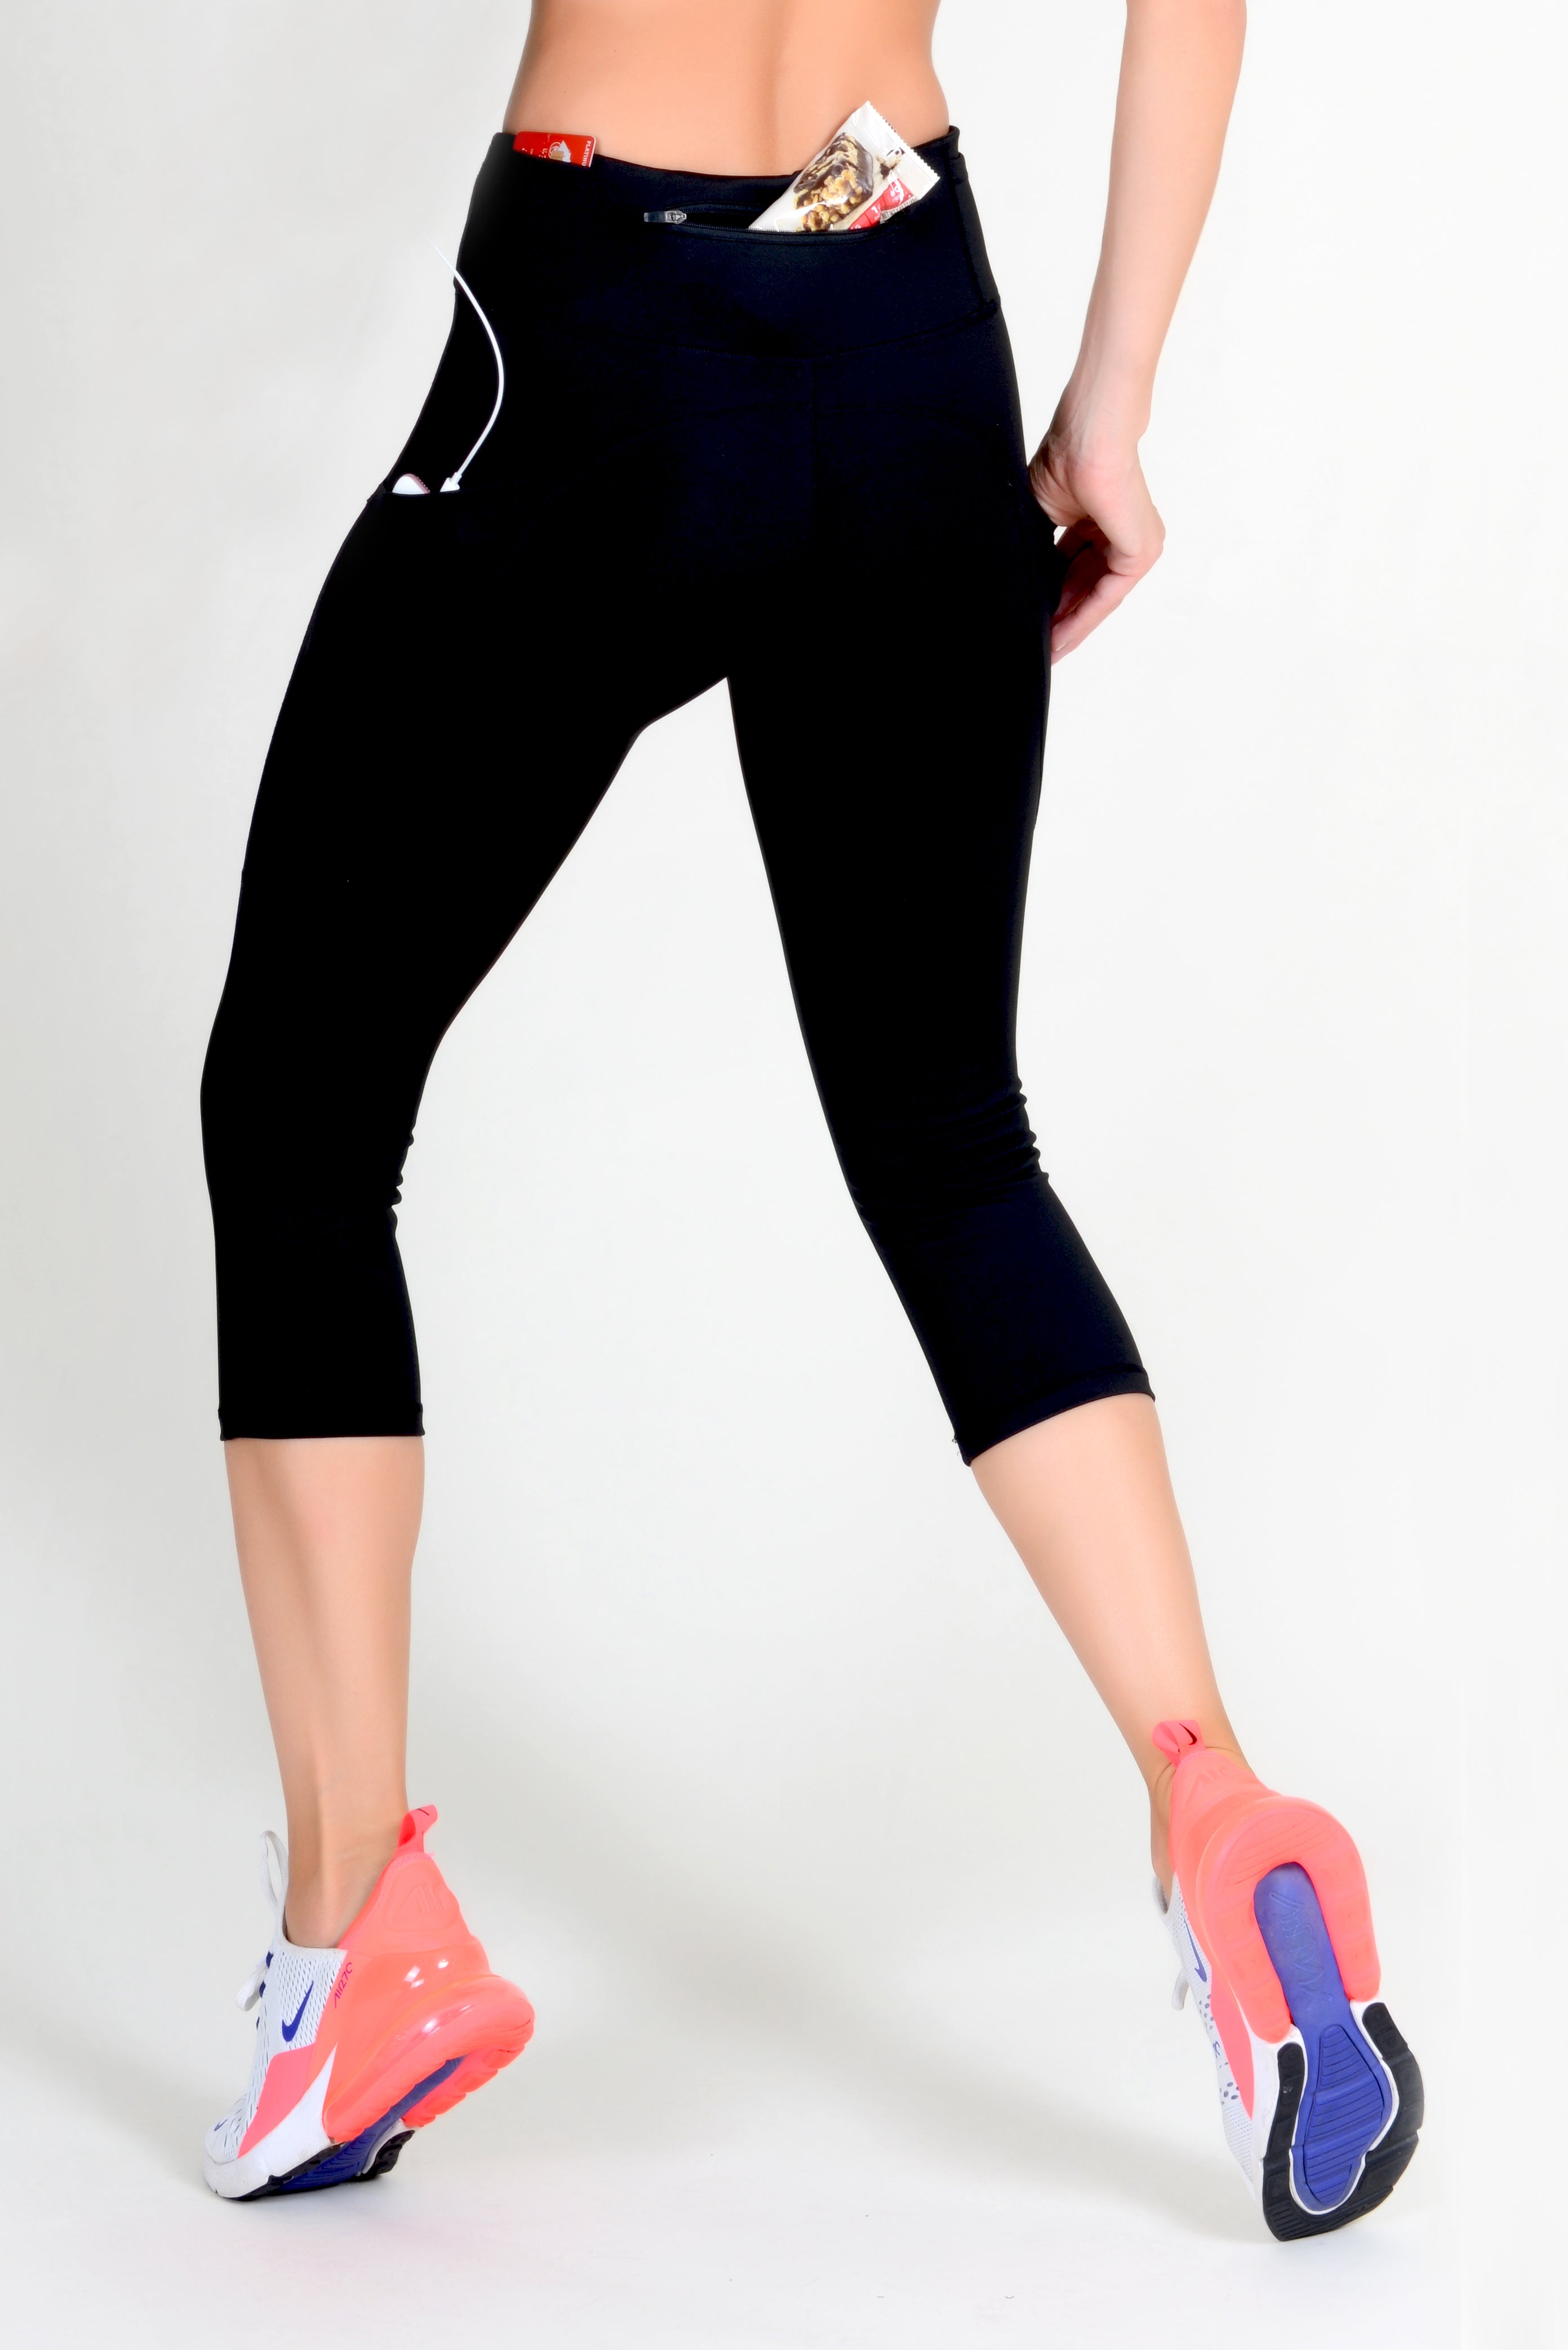 Active 5 Pocket Capri Leggings for Sports Running Tights Exercise ...